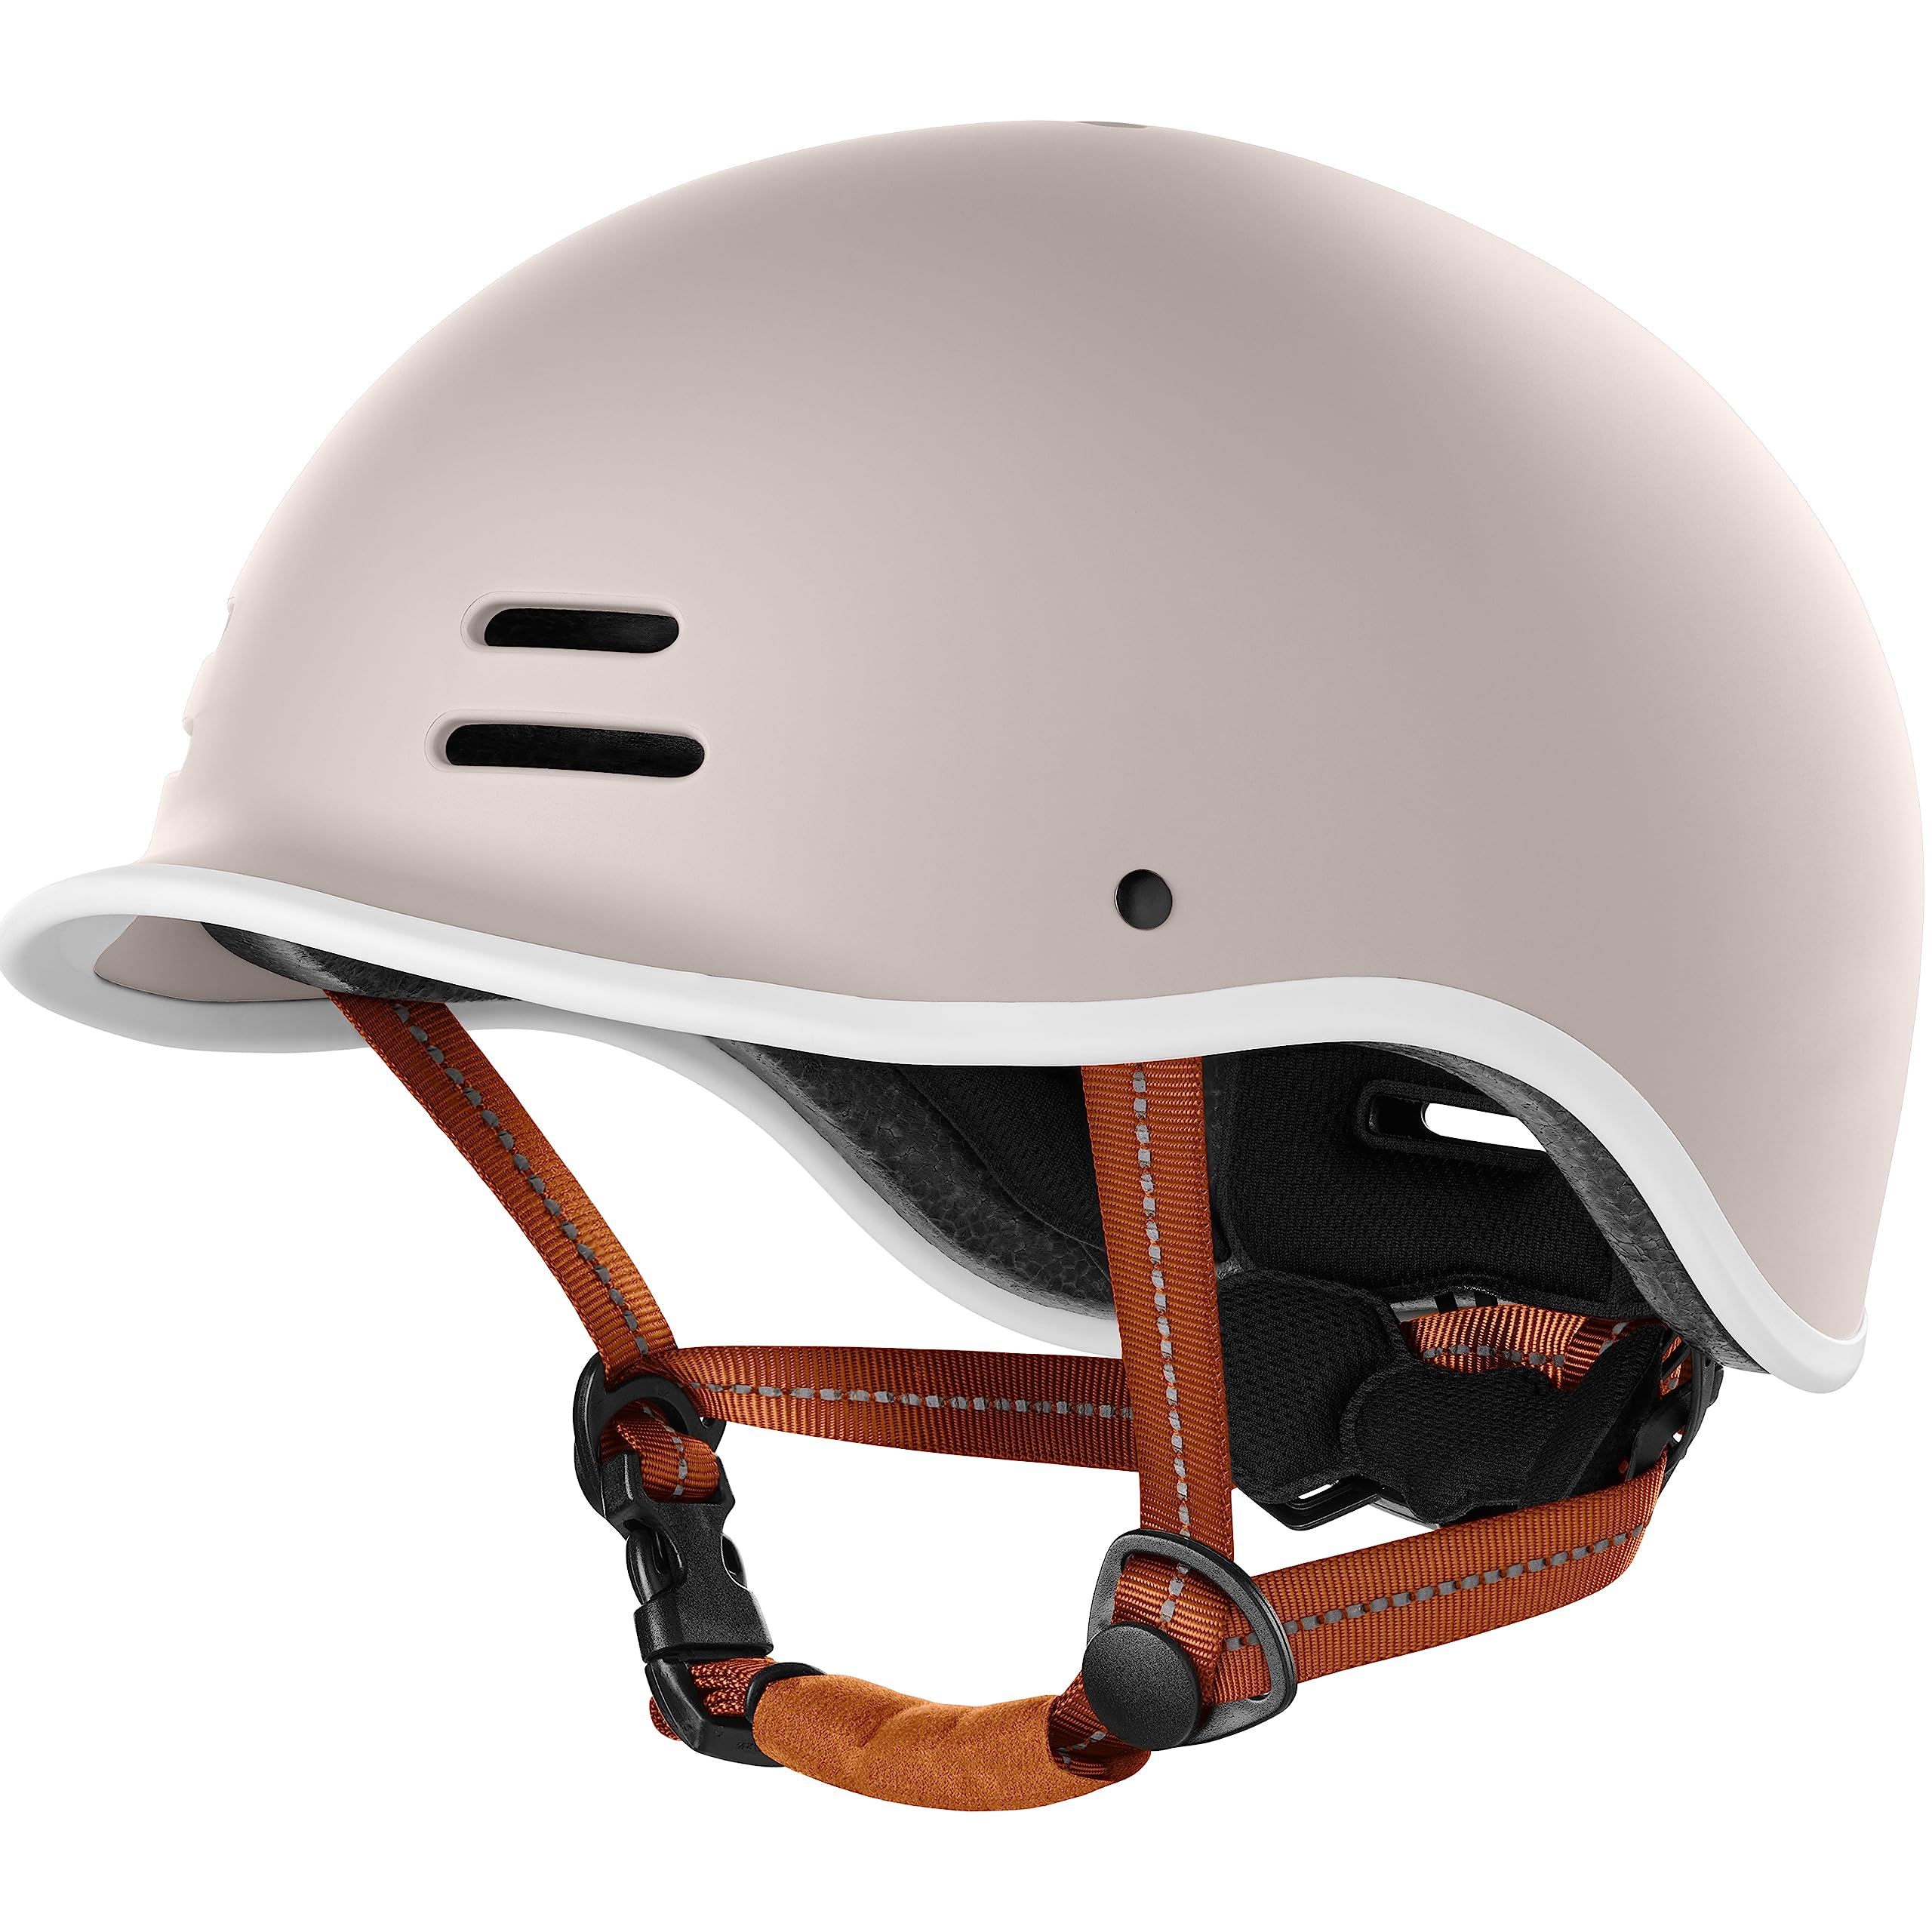 Retrospec Remi Adult Bike Helmet for Men & Women - Bicycle Helmet for Commuting, Road Biking, Skating with Adjustable Ergo Knob Dial